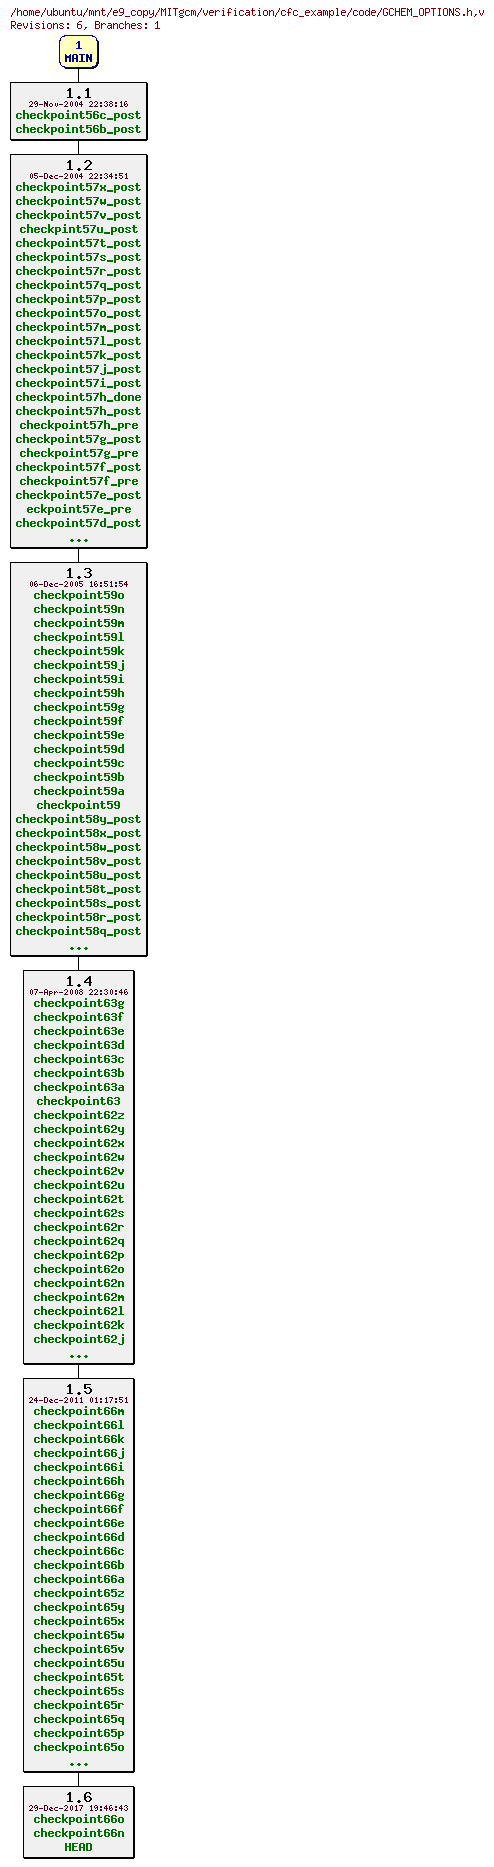 Revisions of MITgcm/verification/cfc_example/code/GCHEM_OPTIONS.h